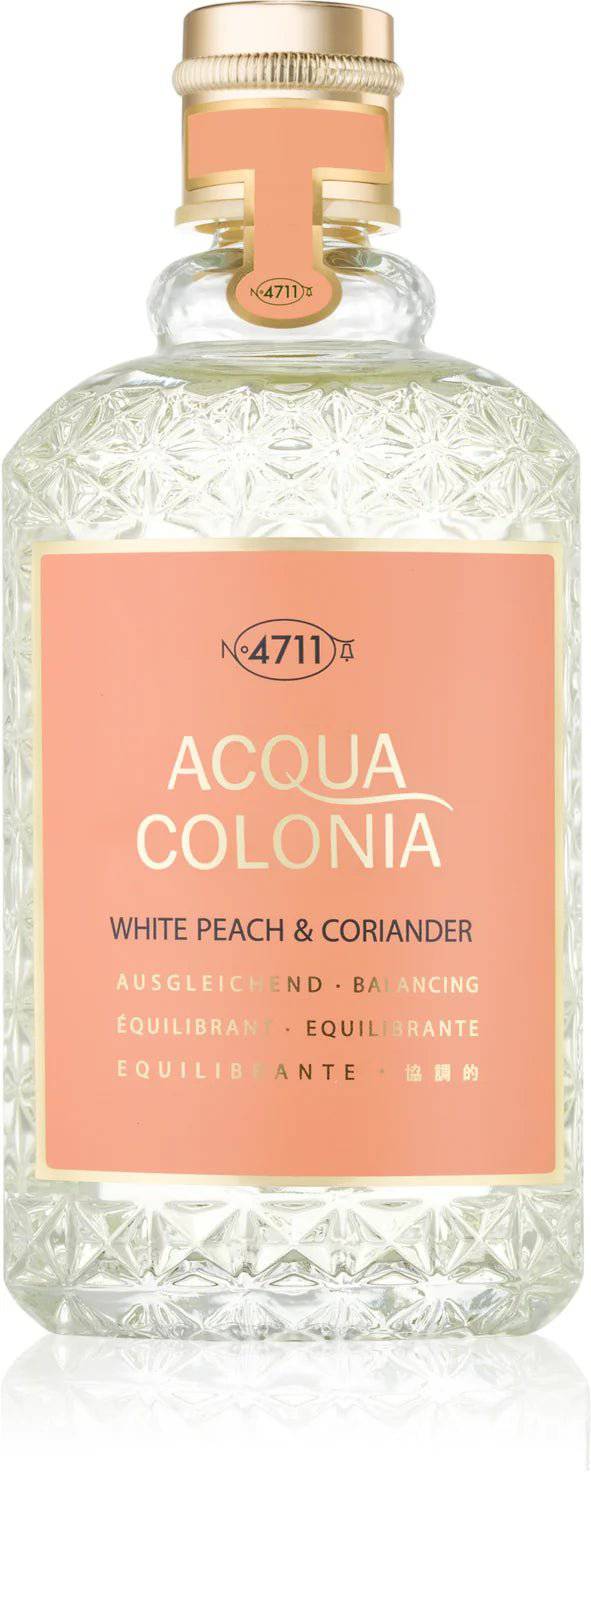 4711 Acqua Colonia White Peach & Coriander - Jasmine Parfums- [ean]